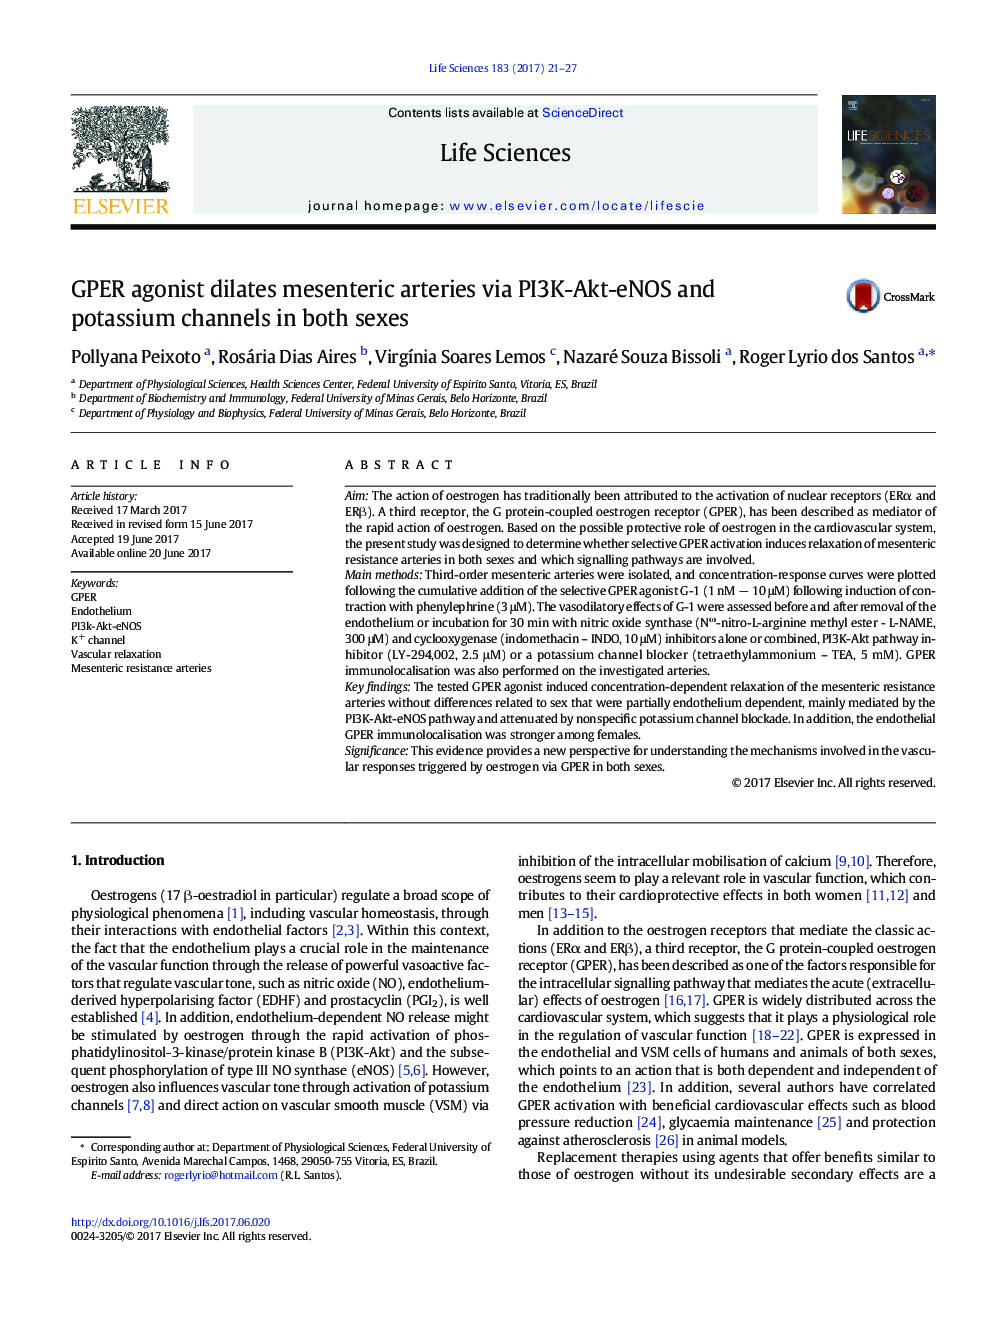 GPER agonist dilates mesenteric arteries via PI3K-Akt-eNOS and potassium channels in both sexes